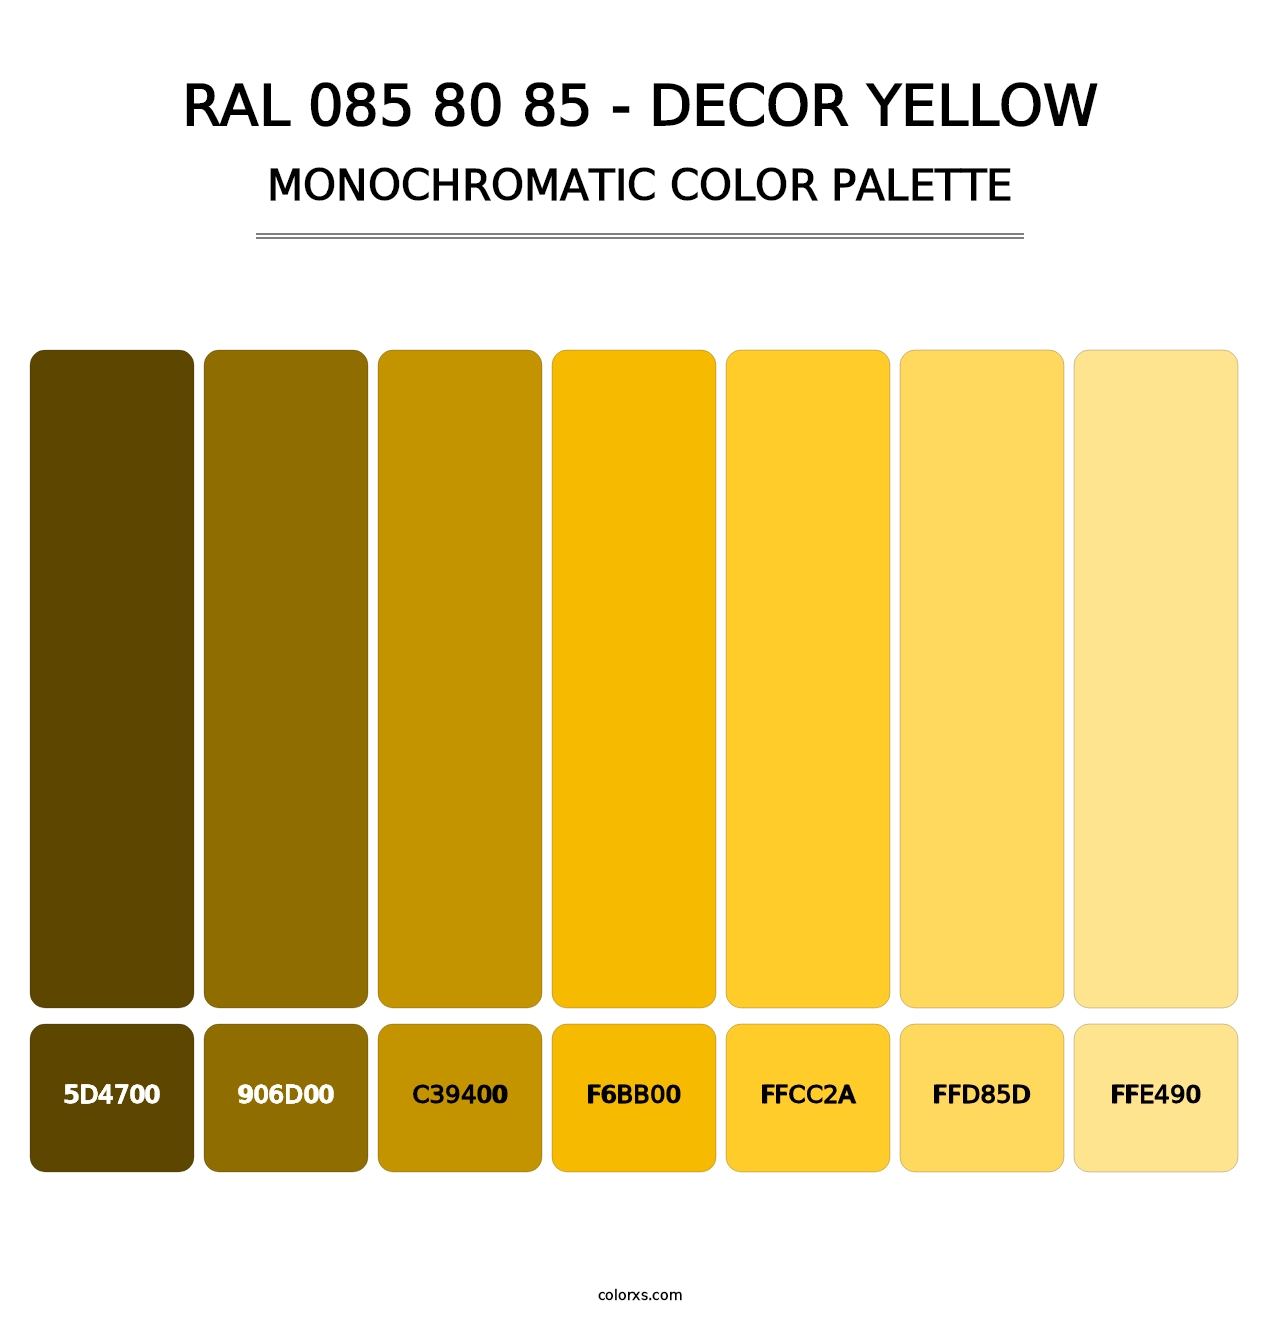 RAL 085 80 85 - Decor Yellow - Monochromatic Color Palette